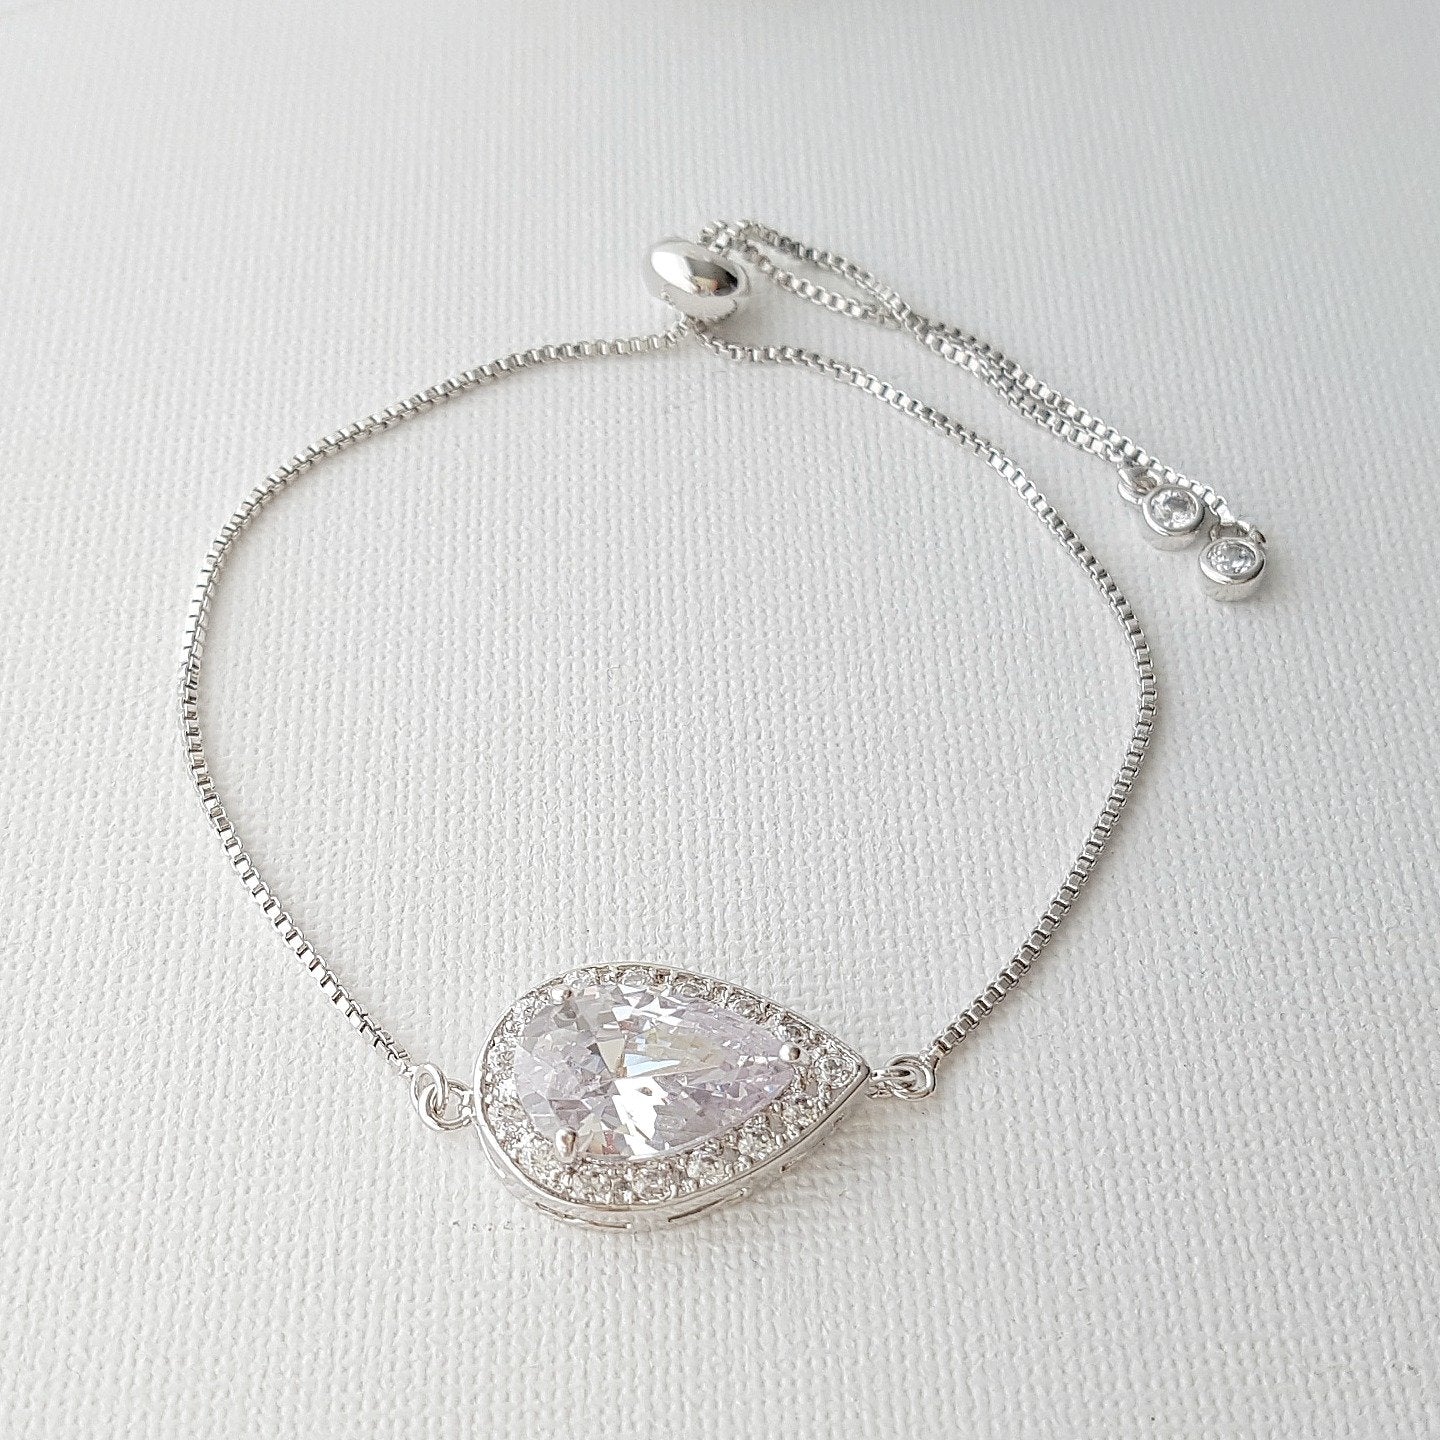 Simple Silver Bridesmaid Bracelet in Cubic Zirconia- Evelyn